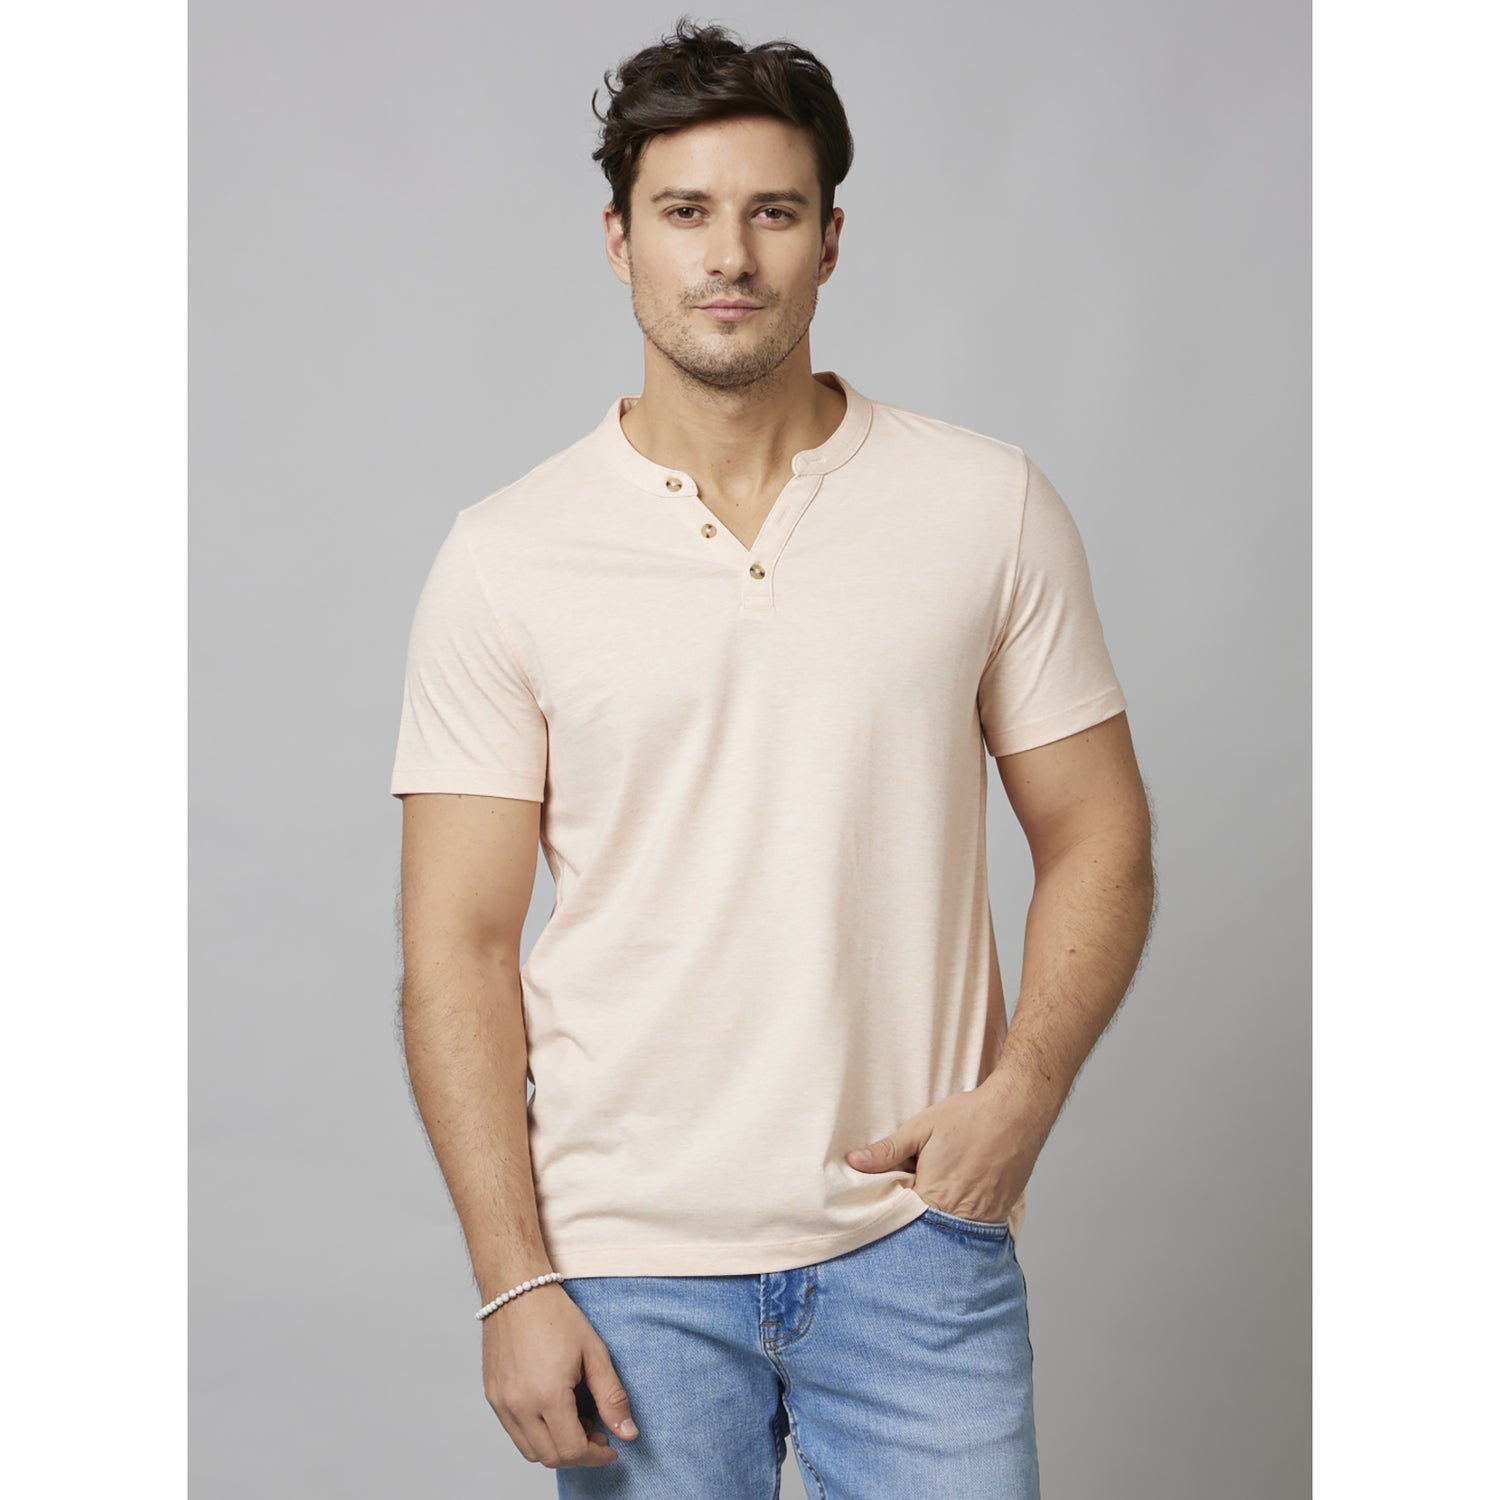 Cream Solid Short Sleeve Cotton Blend T-Shirts (CEGETI1)